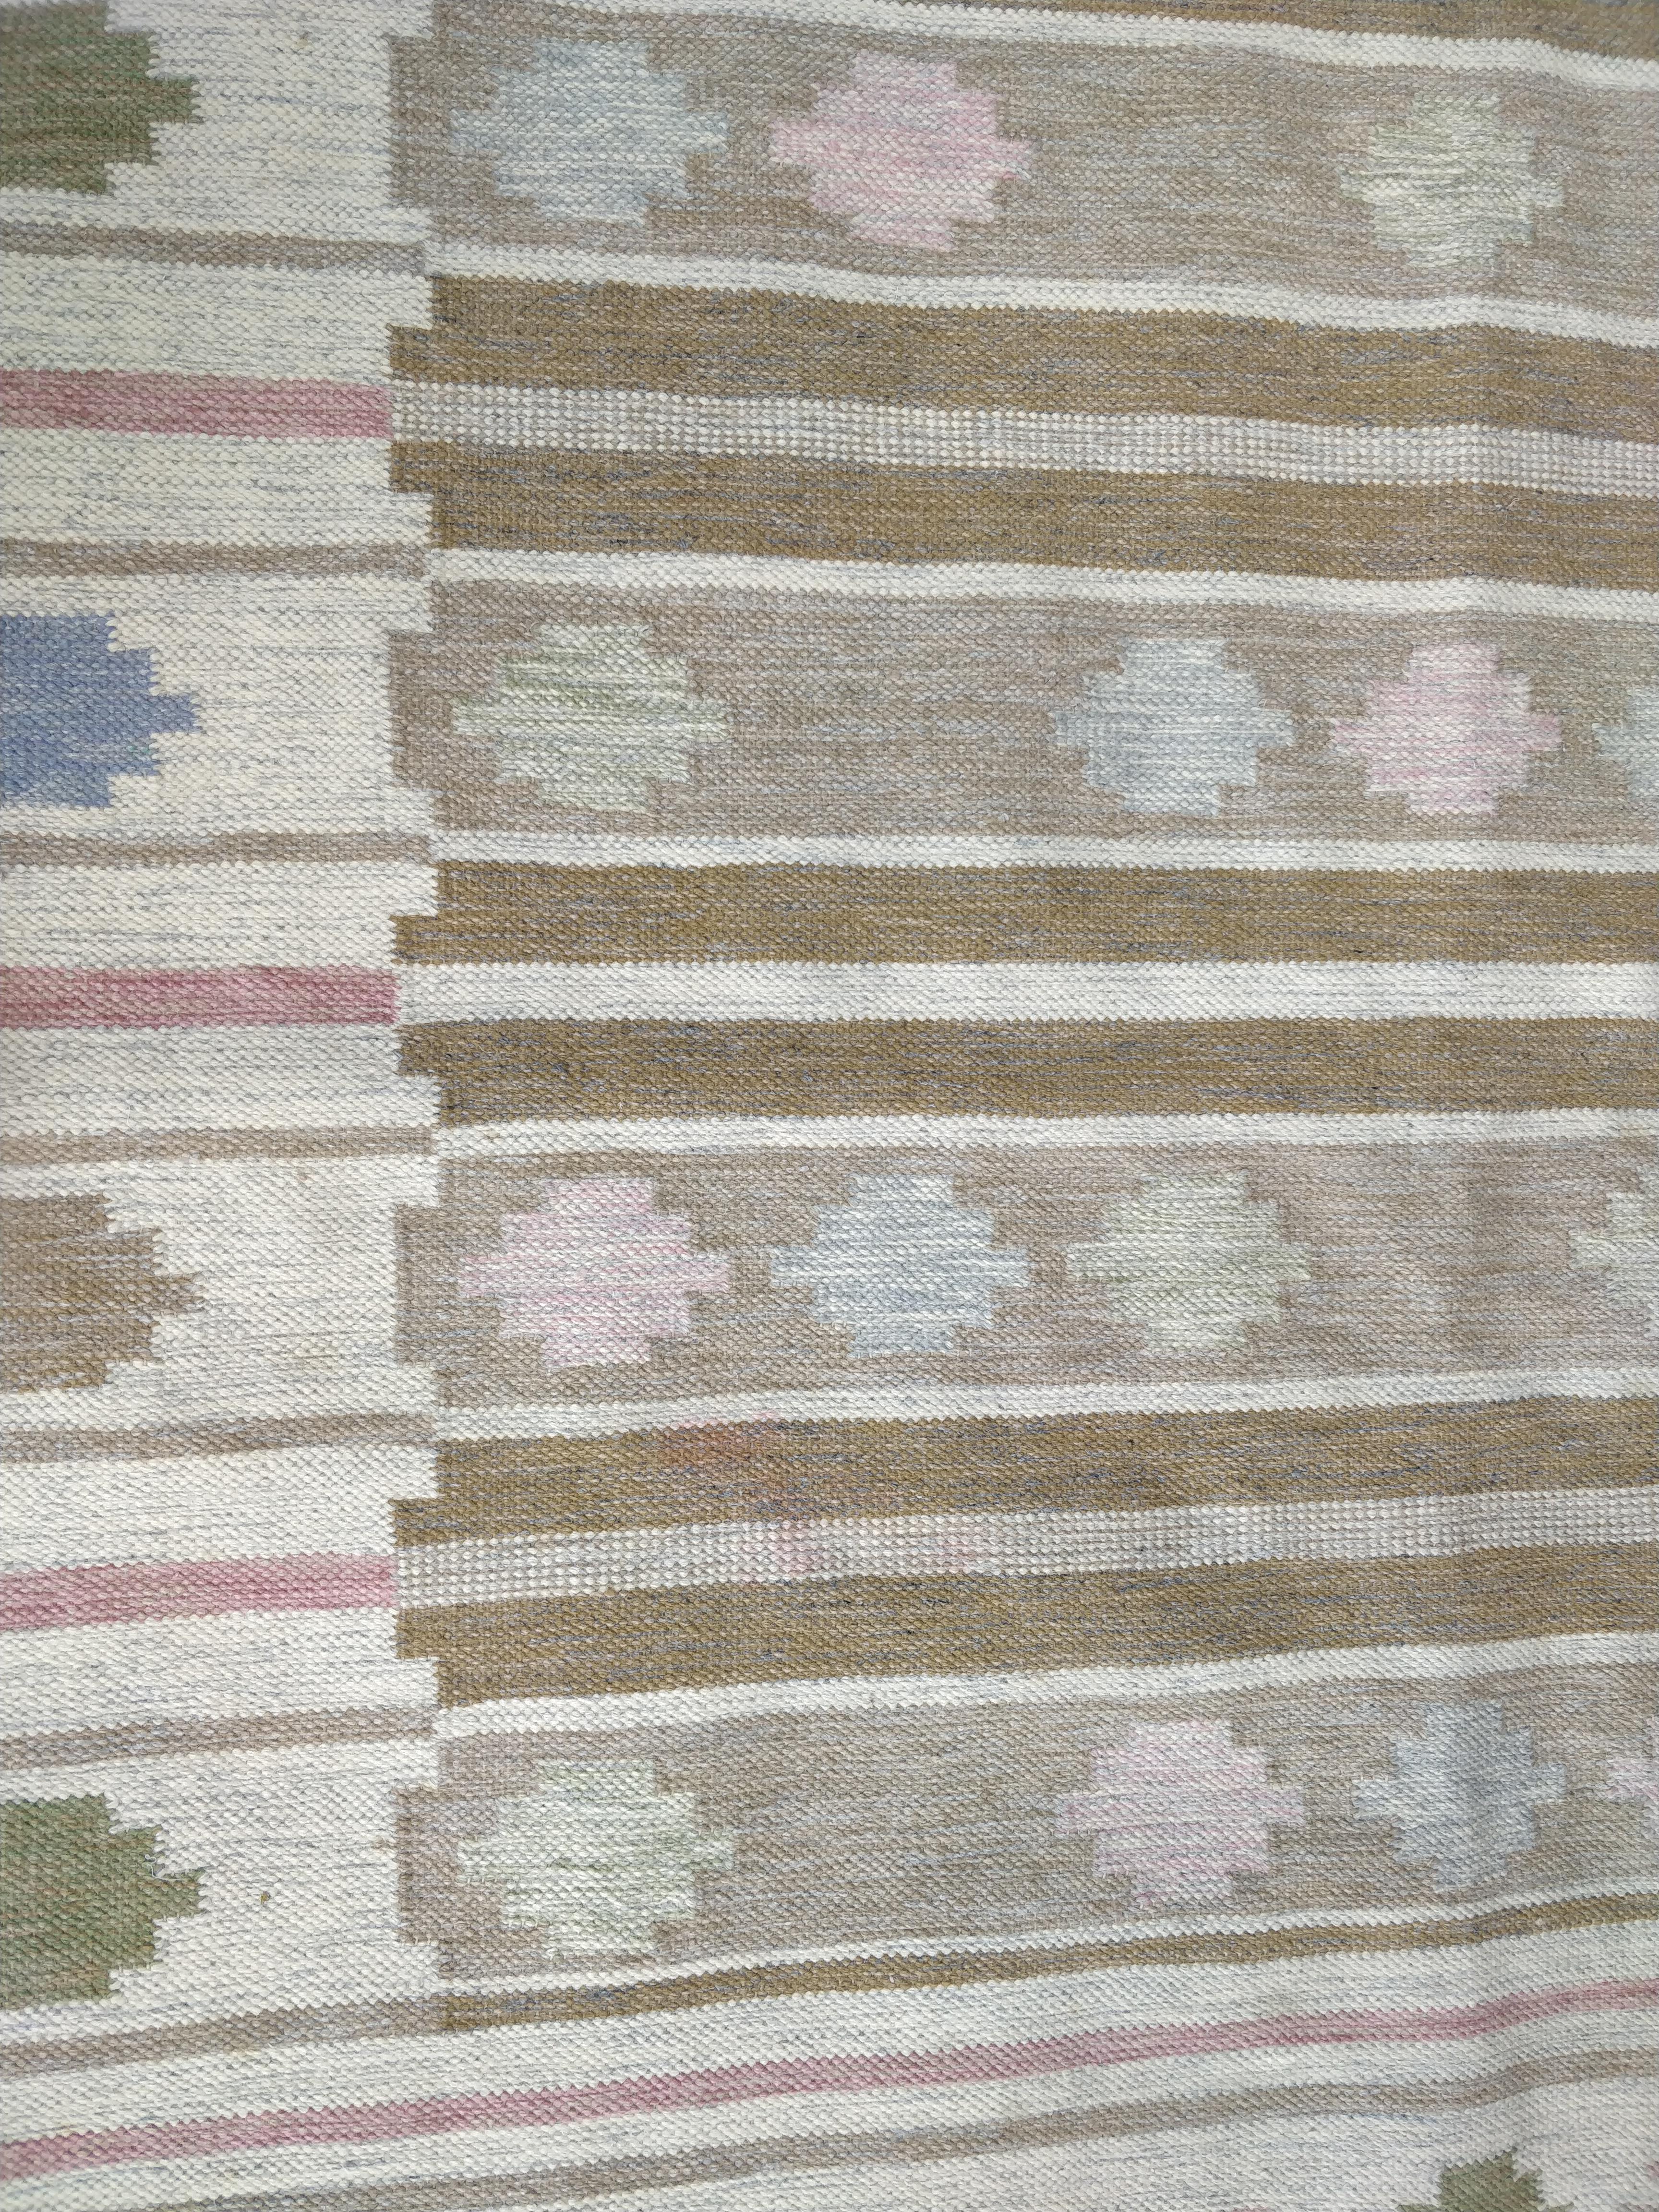 Wool  Flat-weave Kilim carpet by Swedish textile designer Anna Johanna Ångström   For Sale